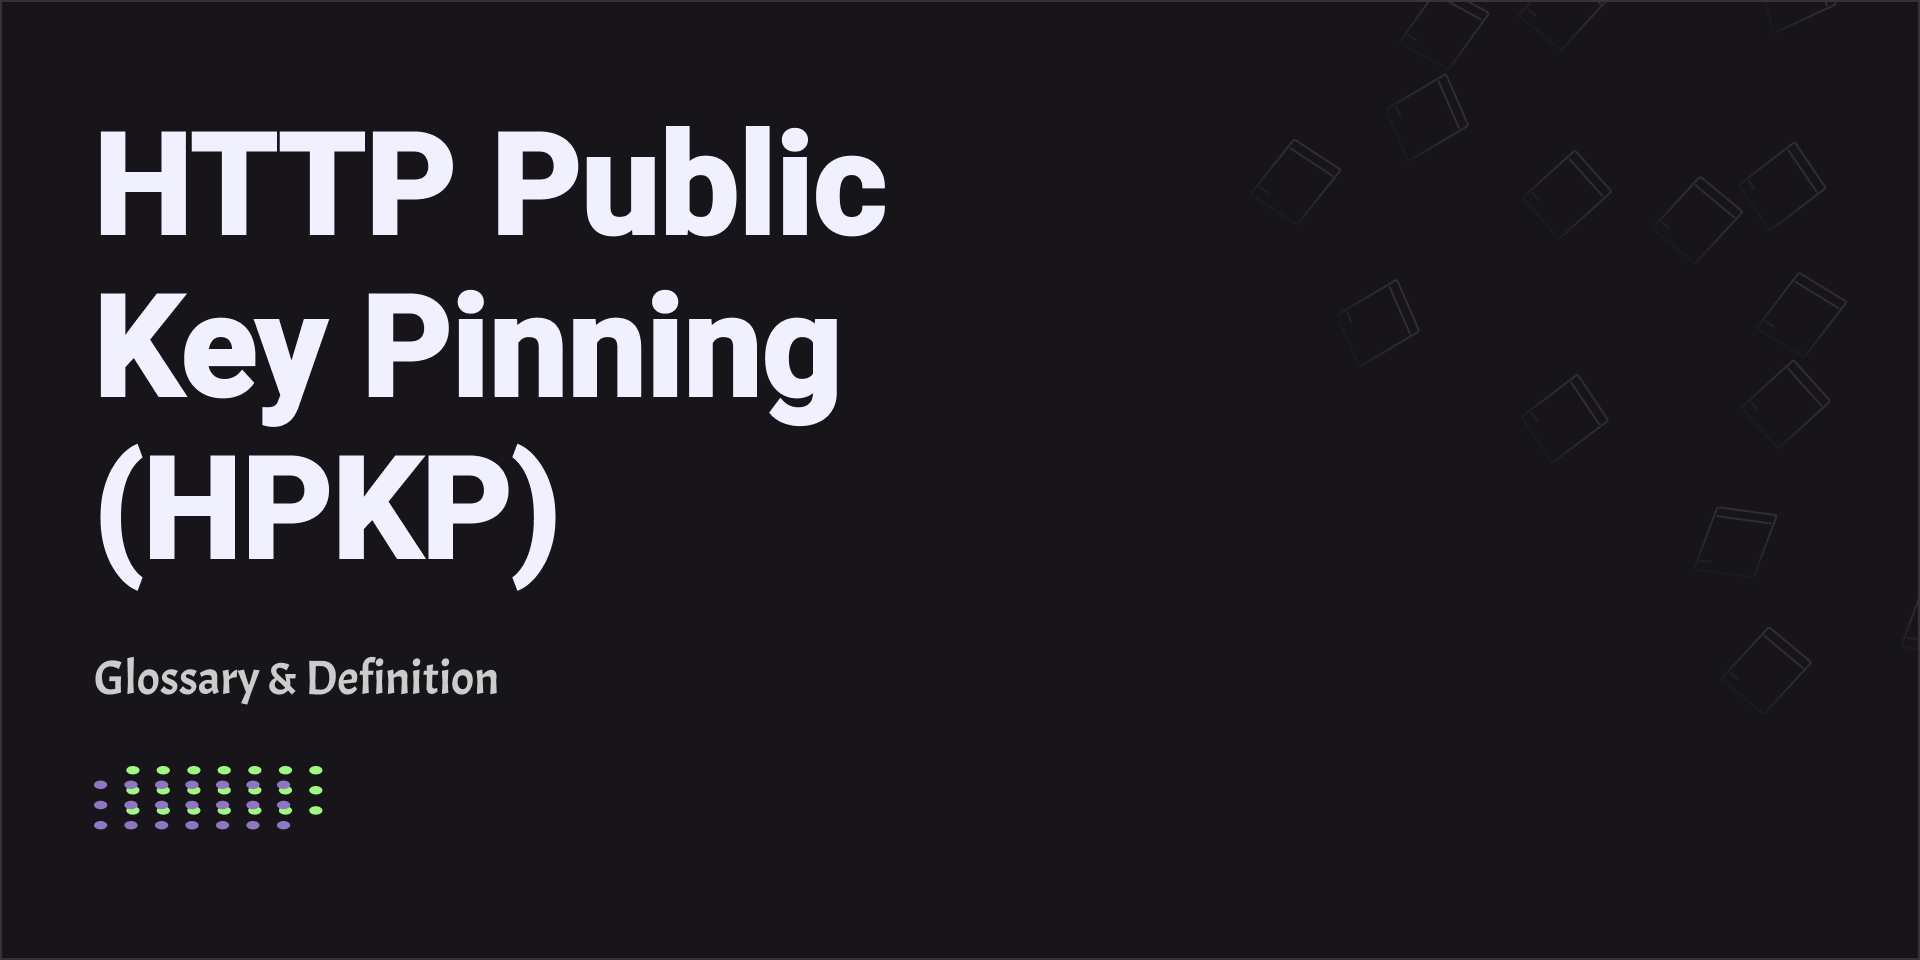 HTTP Public Key Pinning (HPKP)